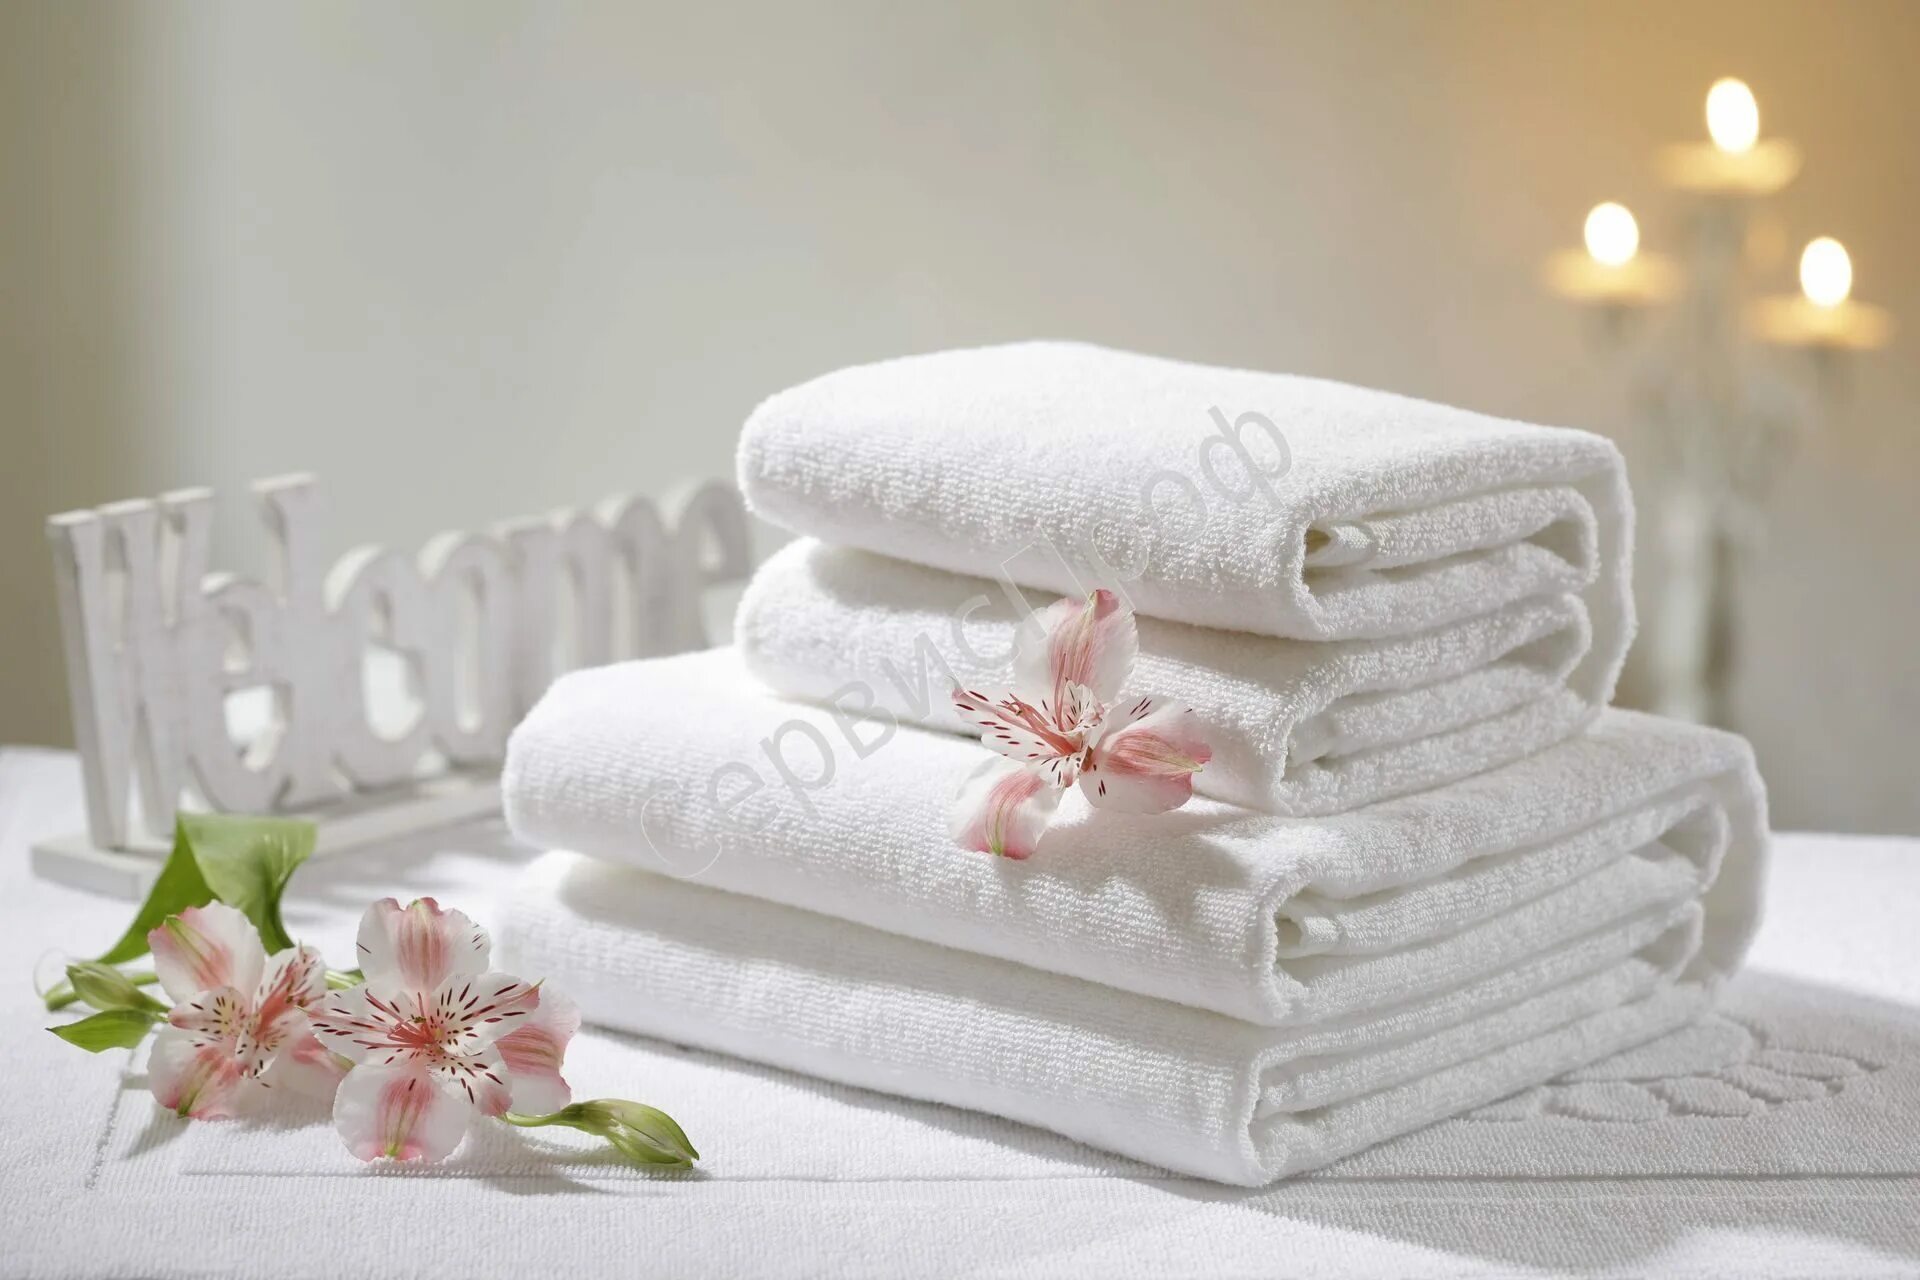 Полотенце на кровати. Красивые полотенца. Текстиль полотенца. Полотенце махровое. Полотенце махровое белый.